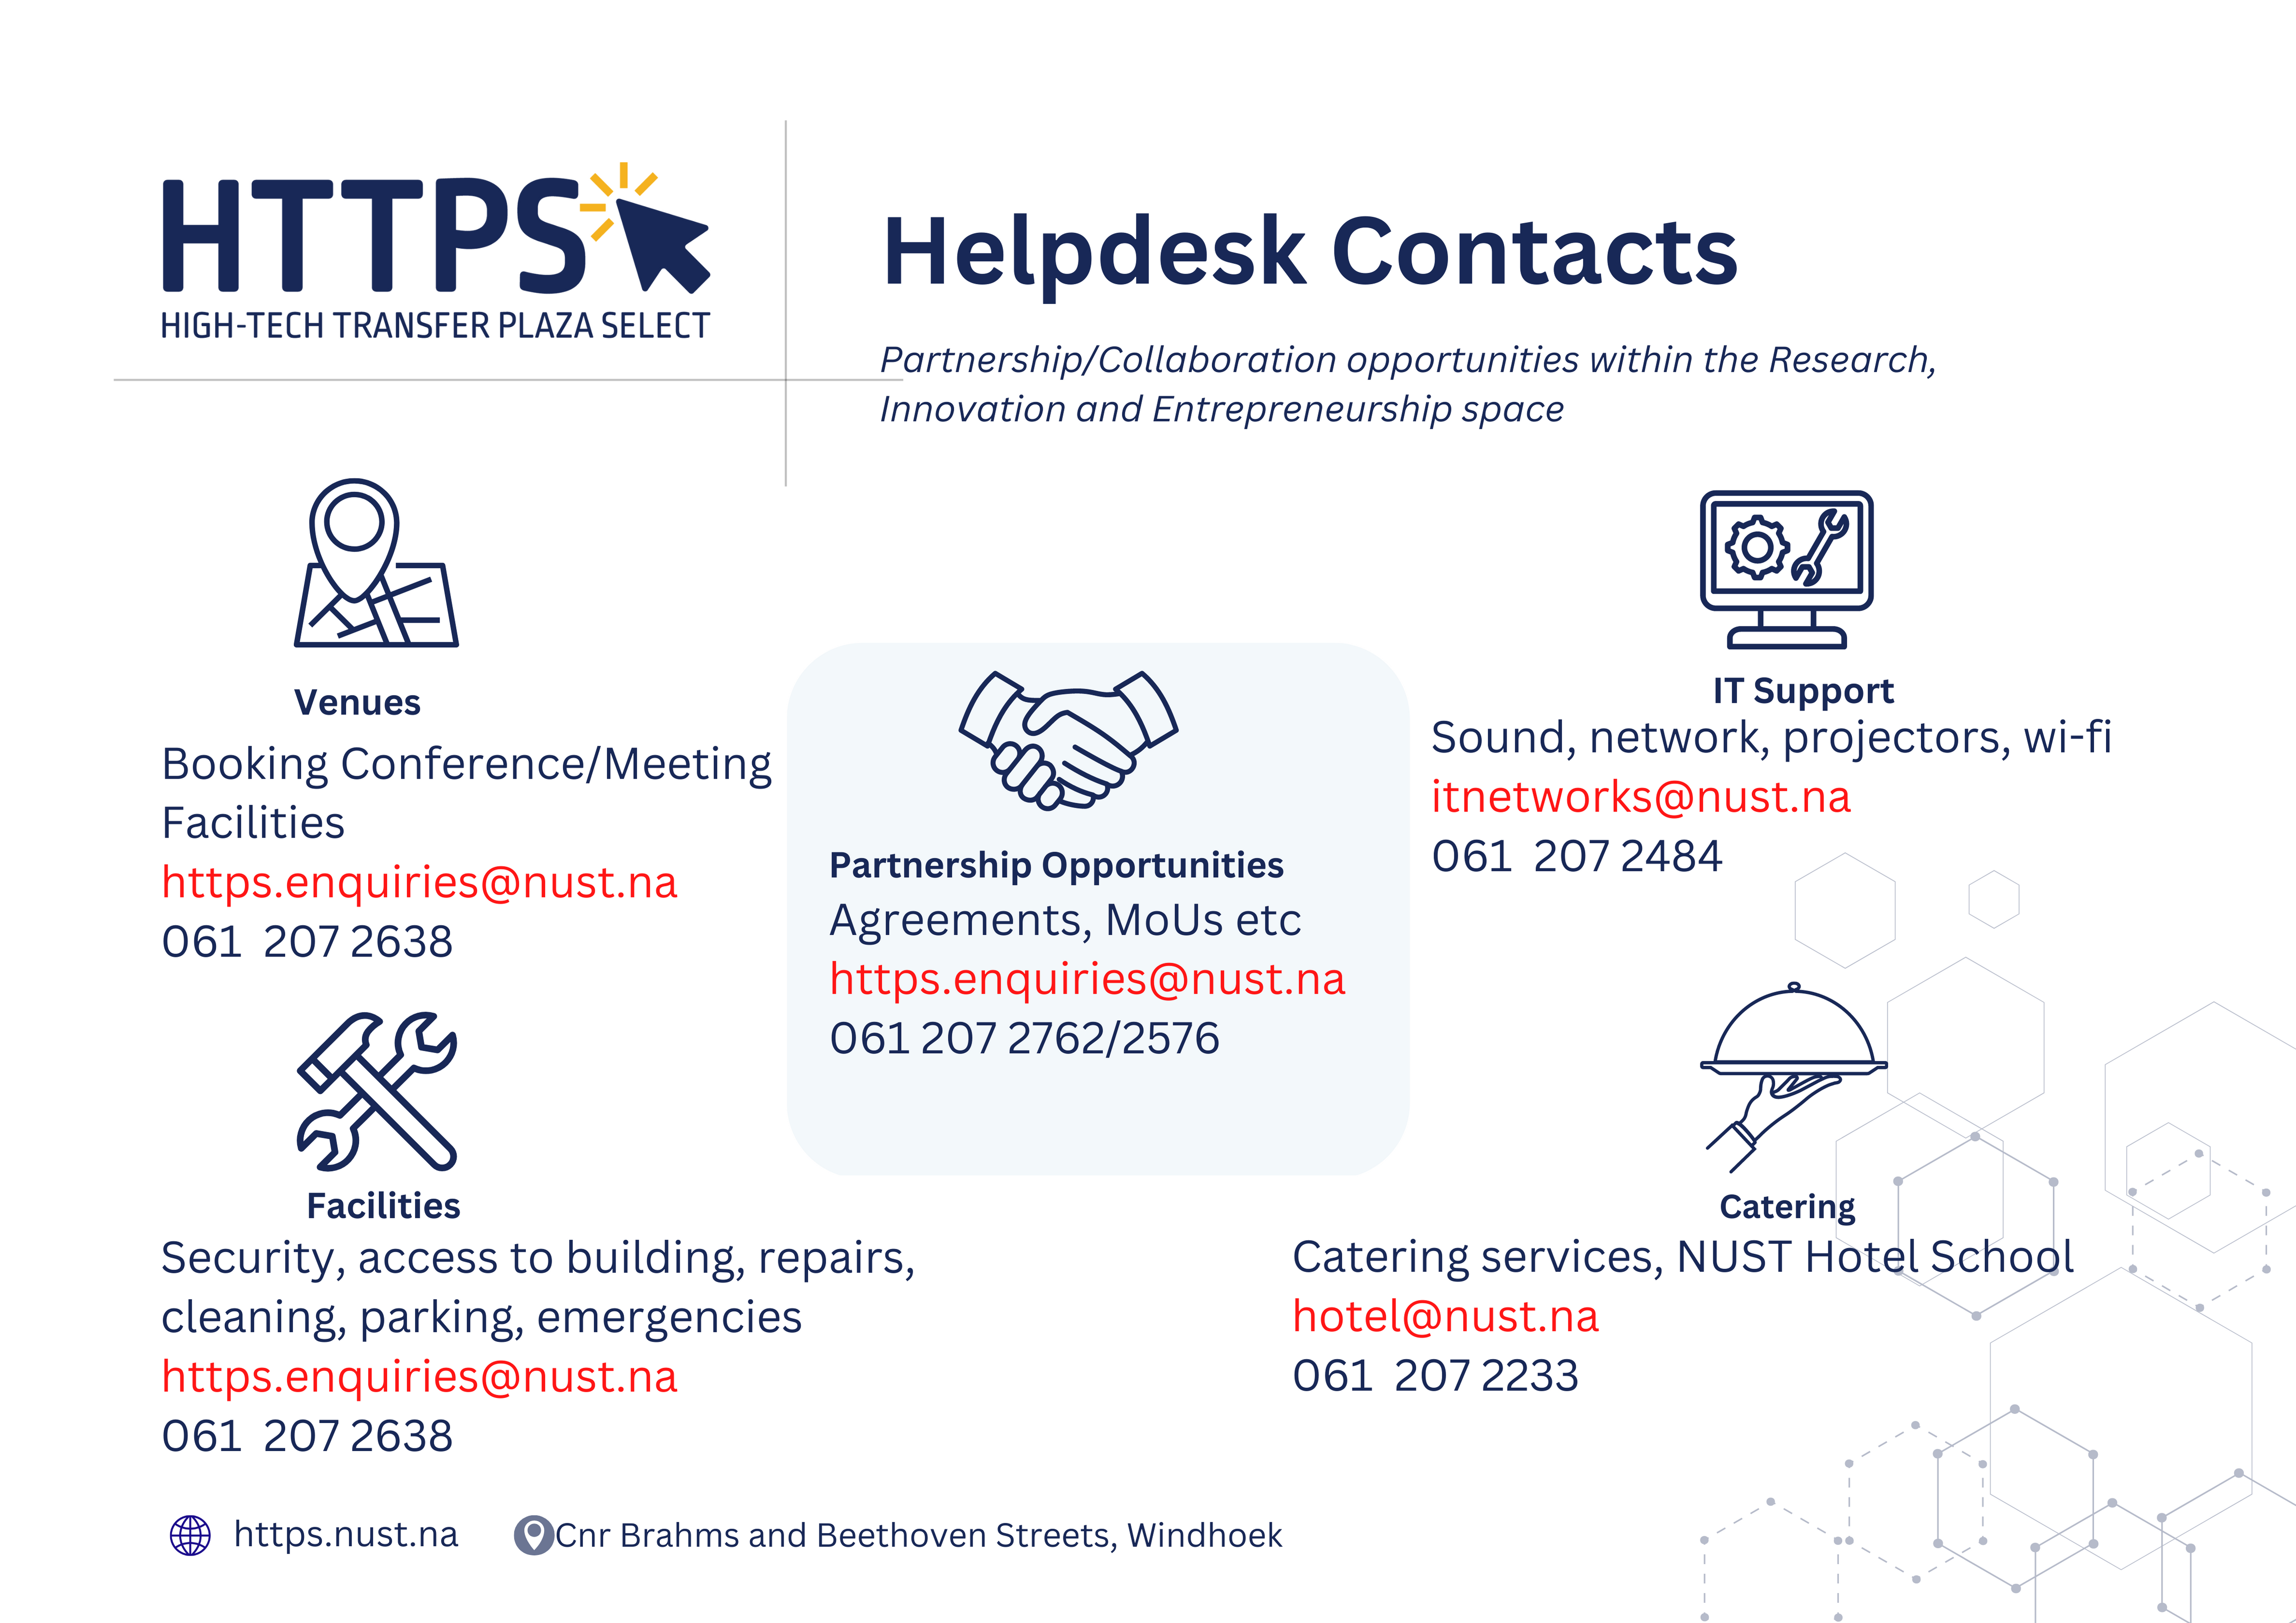 HTTPS Helpdesk Contact Details